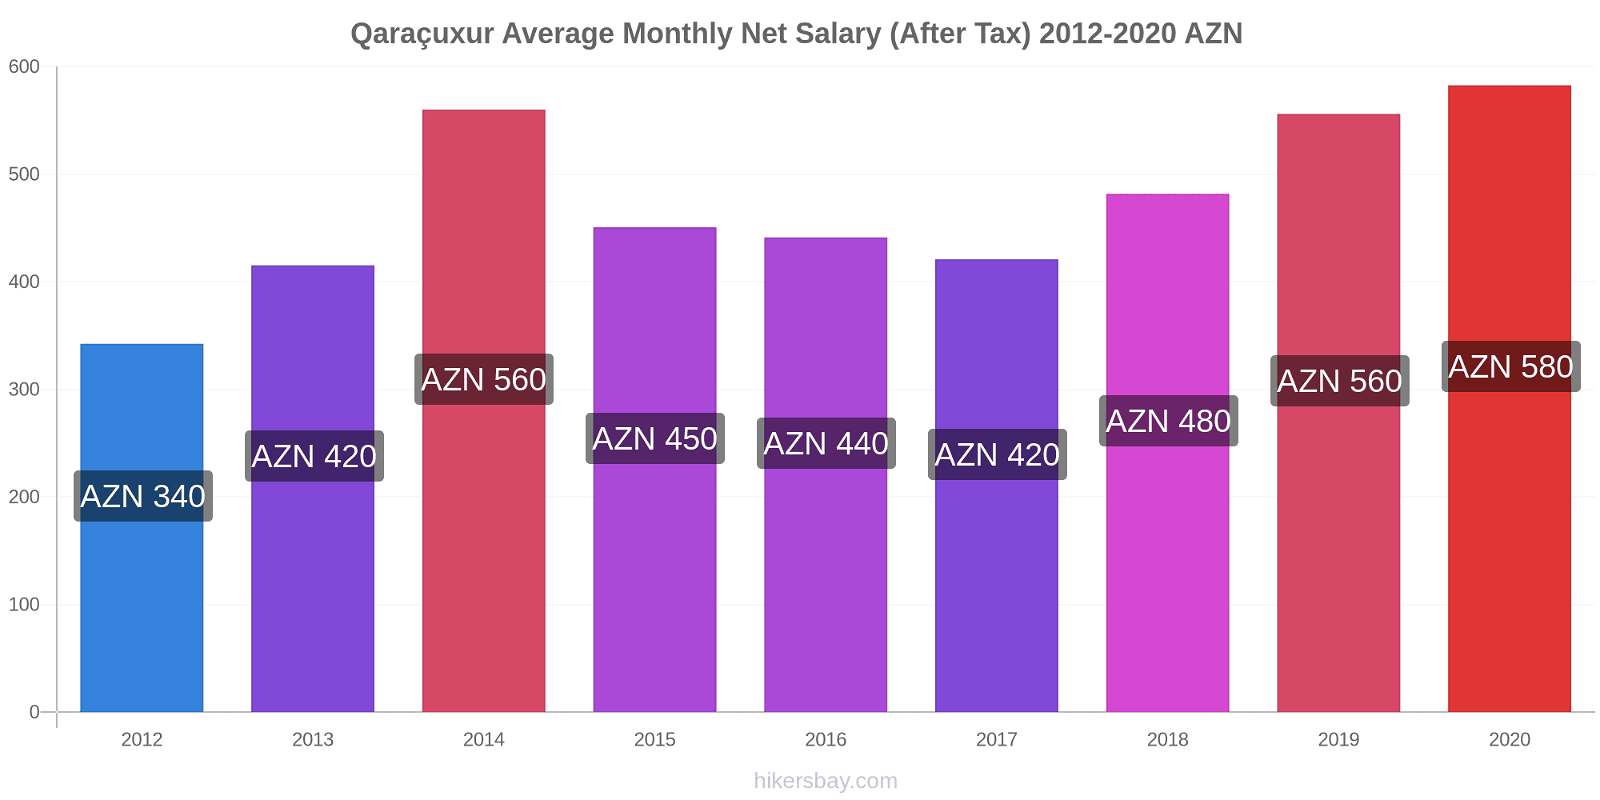 Qaraçuxur price changes Average Monthly Net Salary (After Tax) hikersbay.com